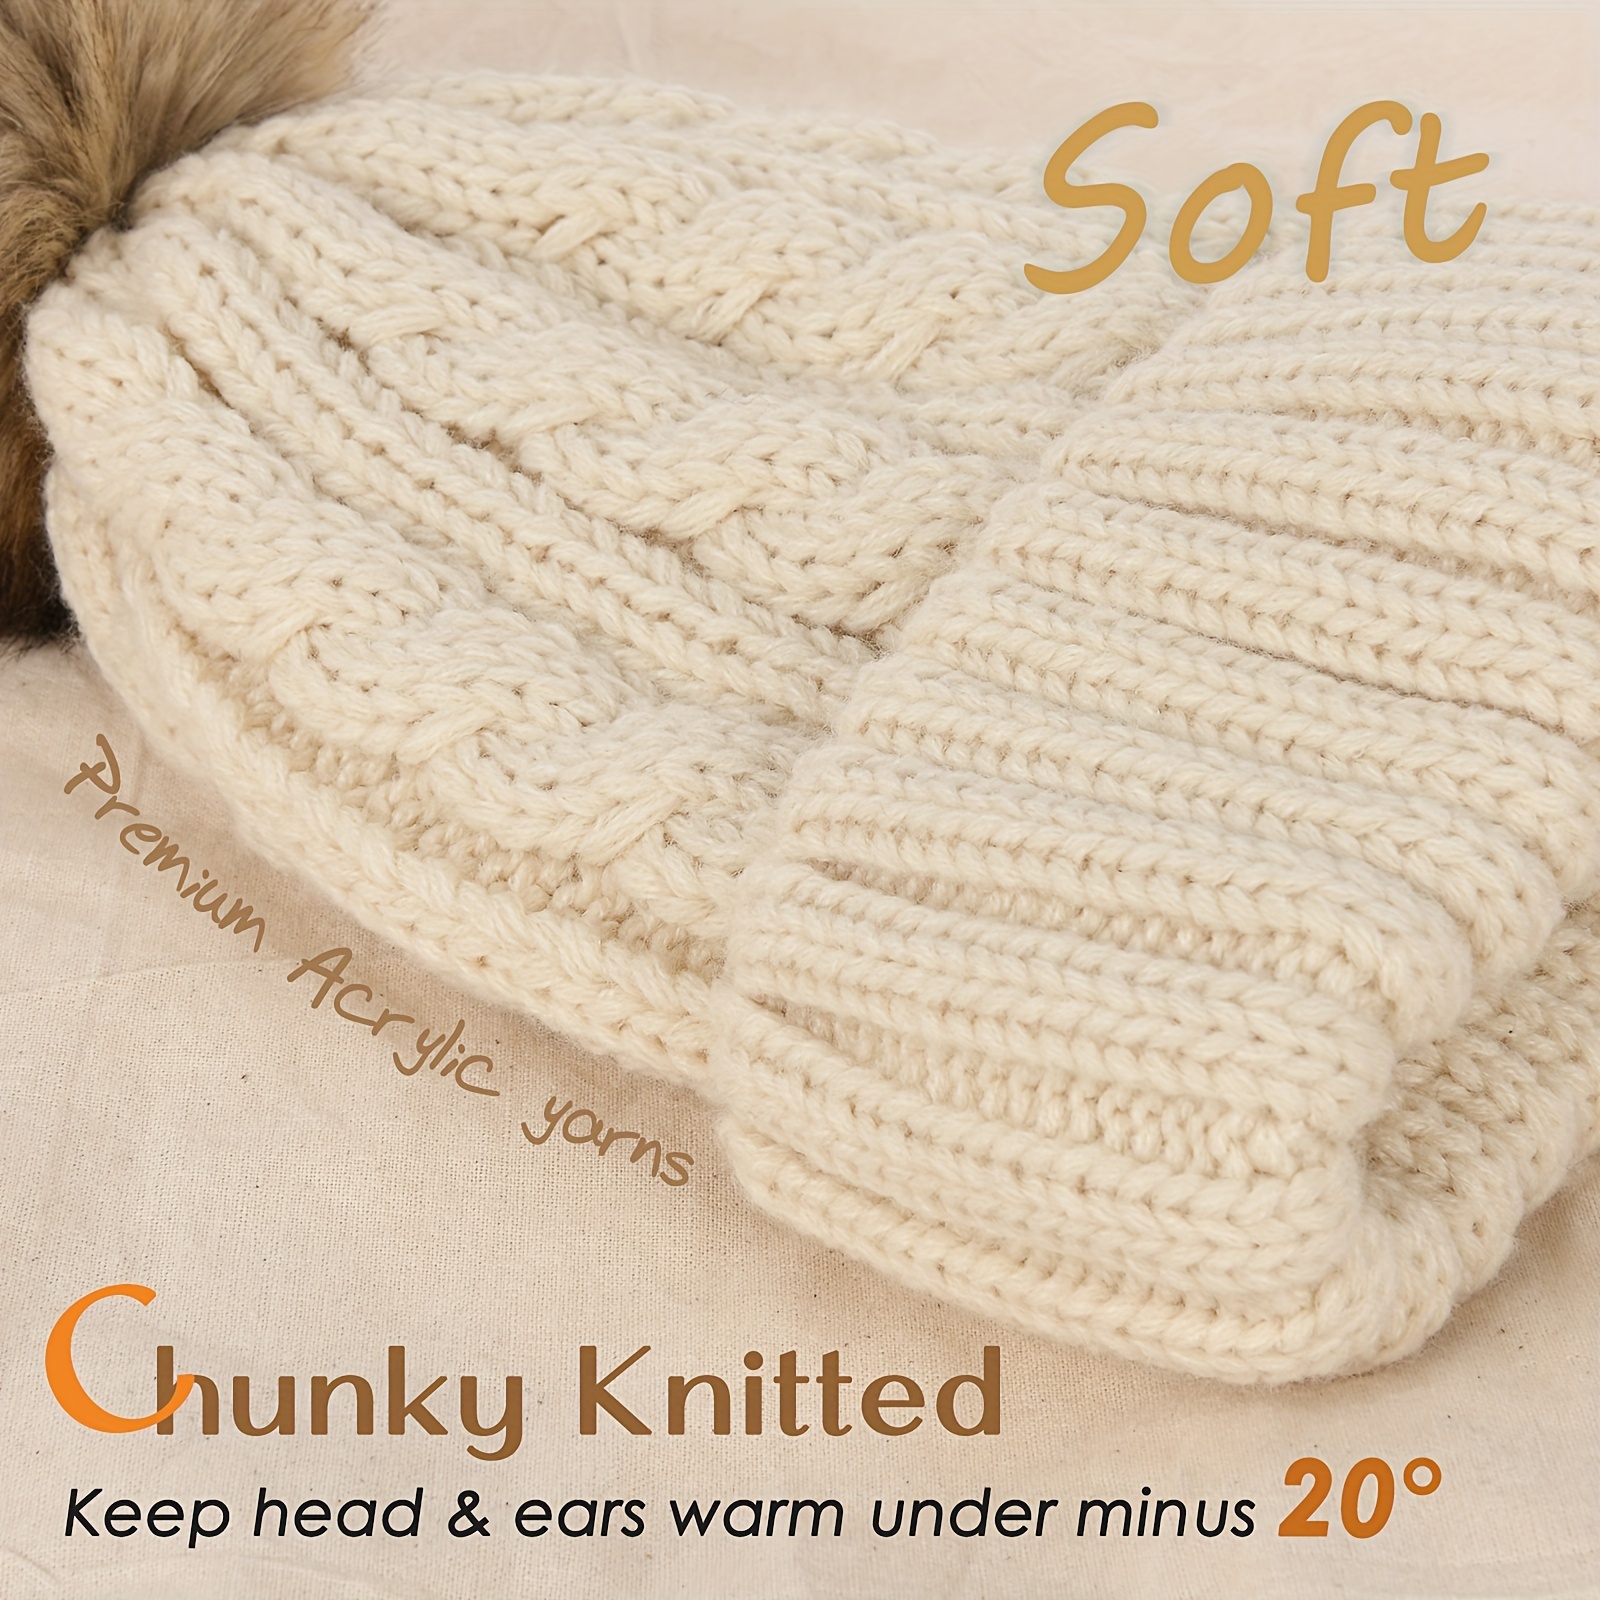 Winter Warm Cuffed Beanie Pom Solid Color Ribbed Knit Hats - Temu Australia